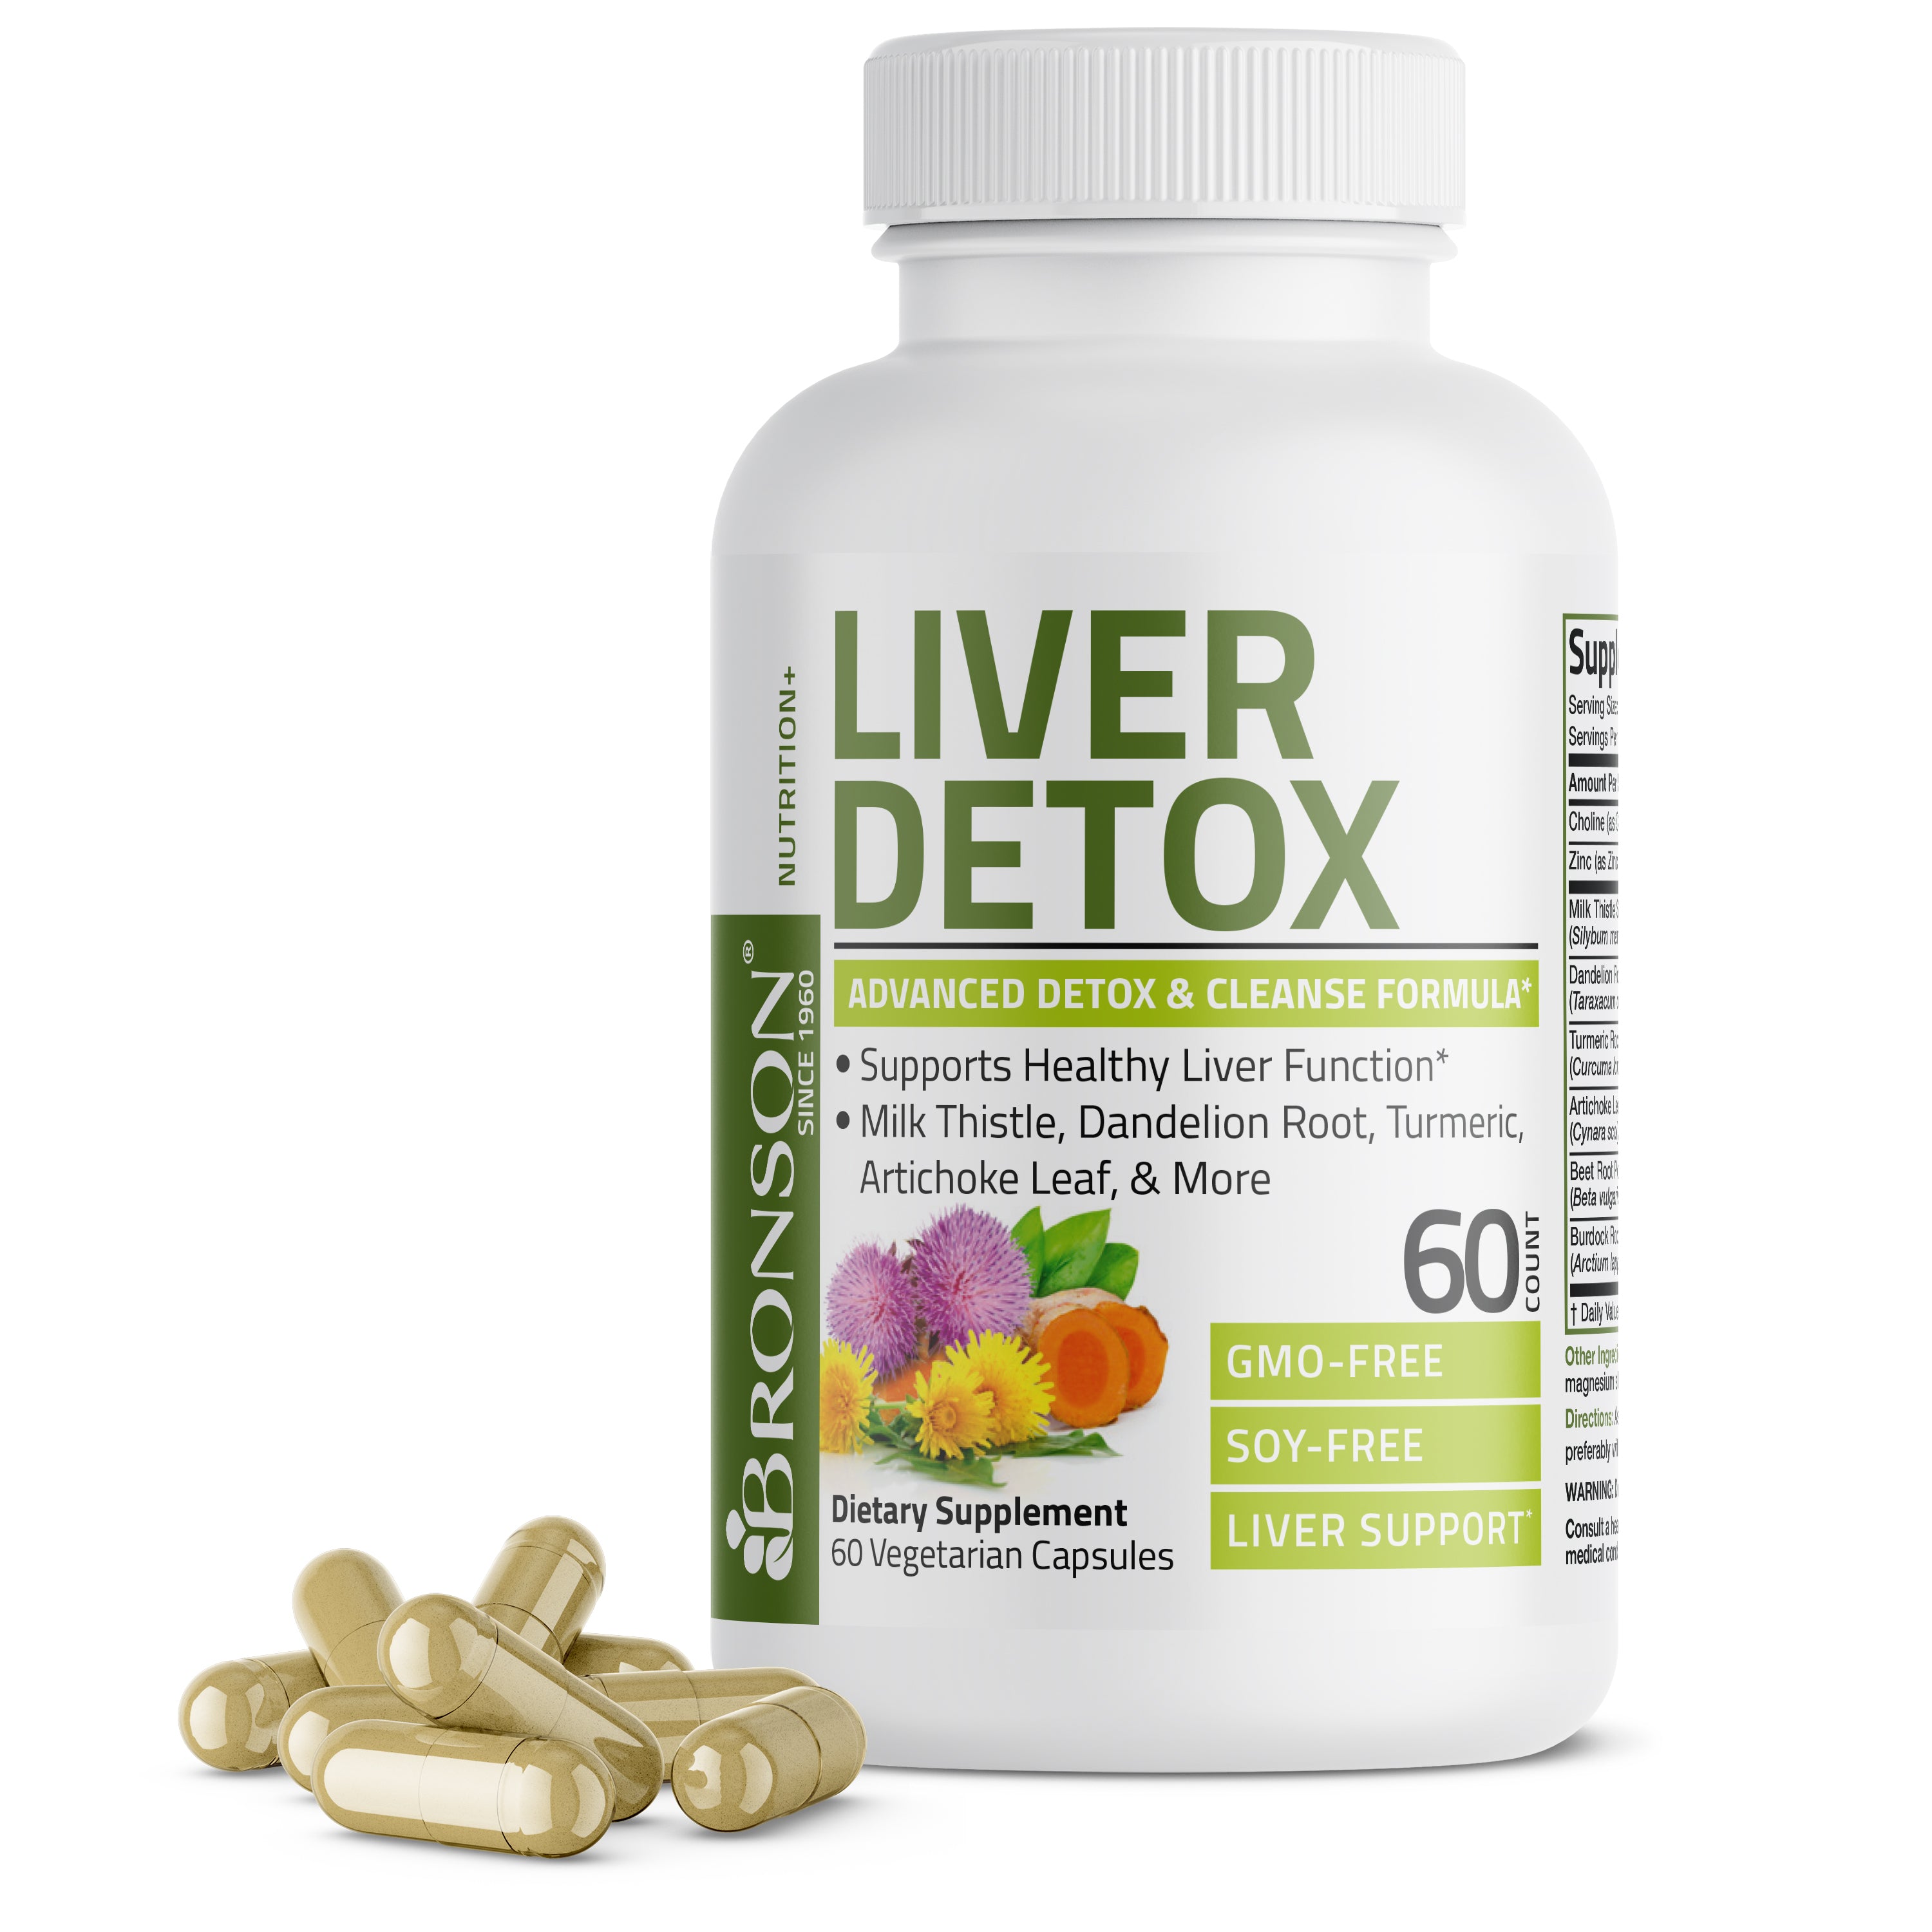 Liver Detox Advanced Detox & Cleansing Formula view 1 of 6